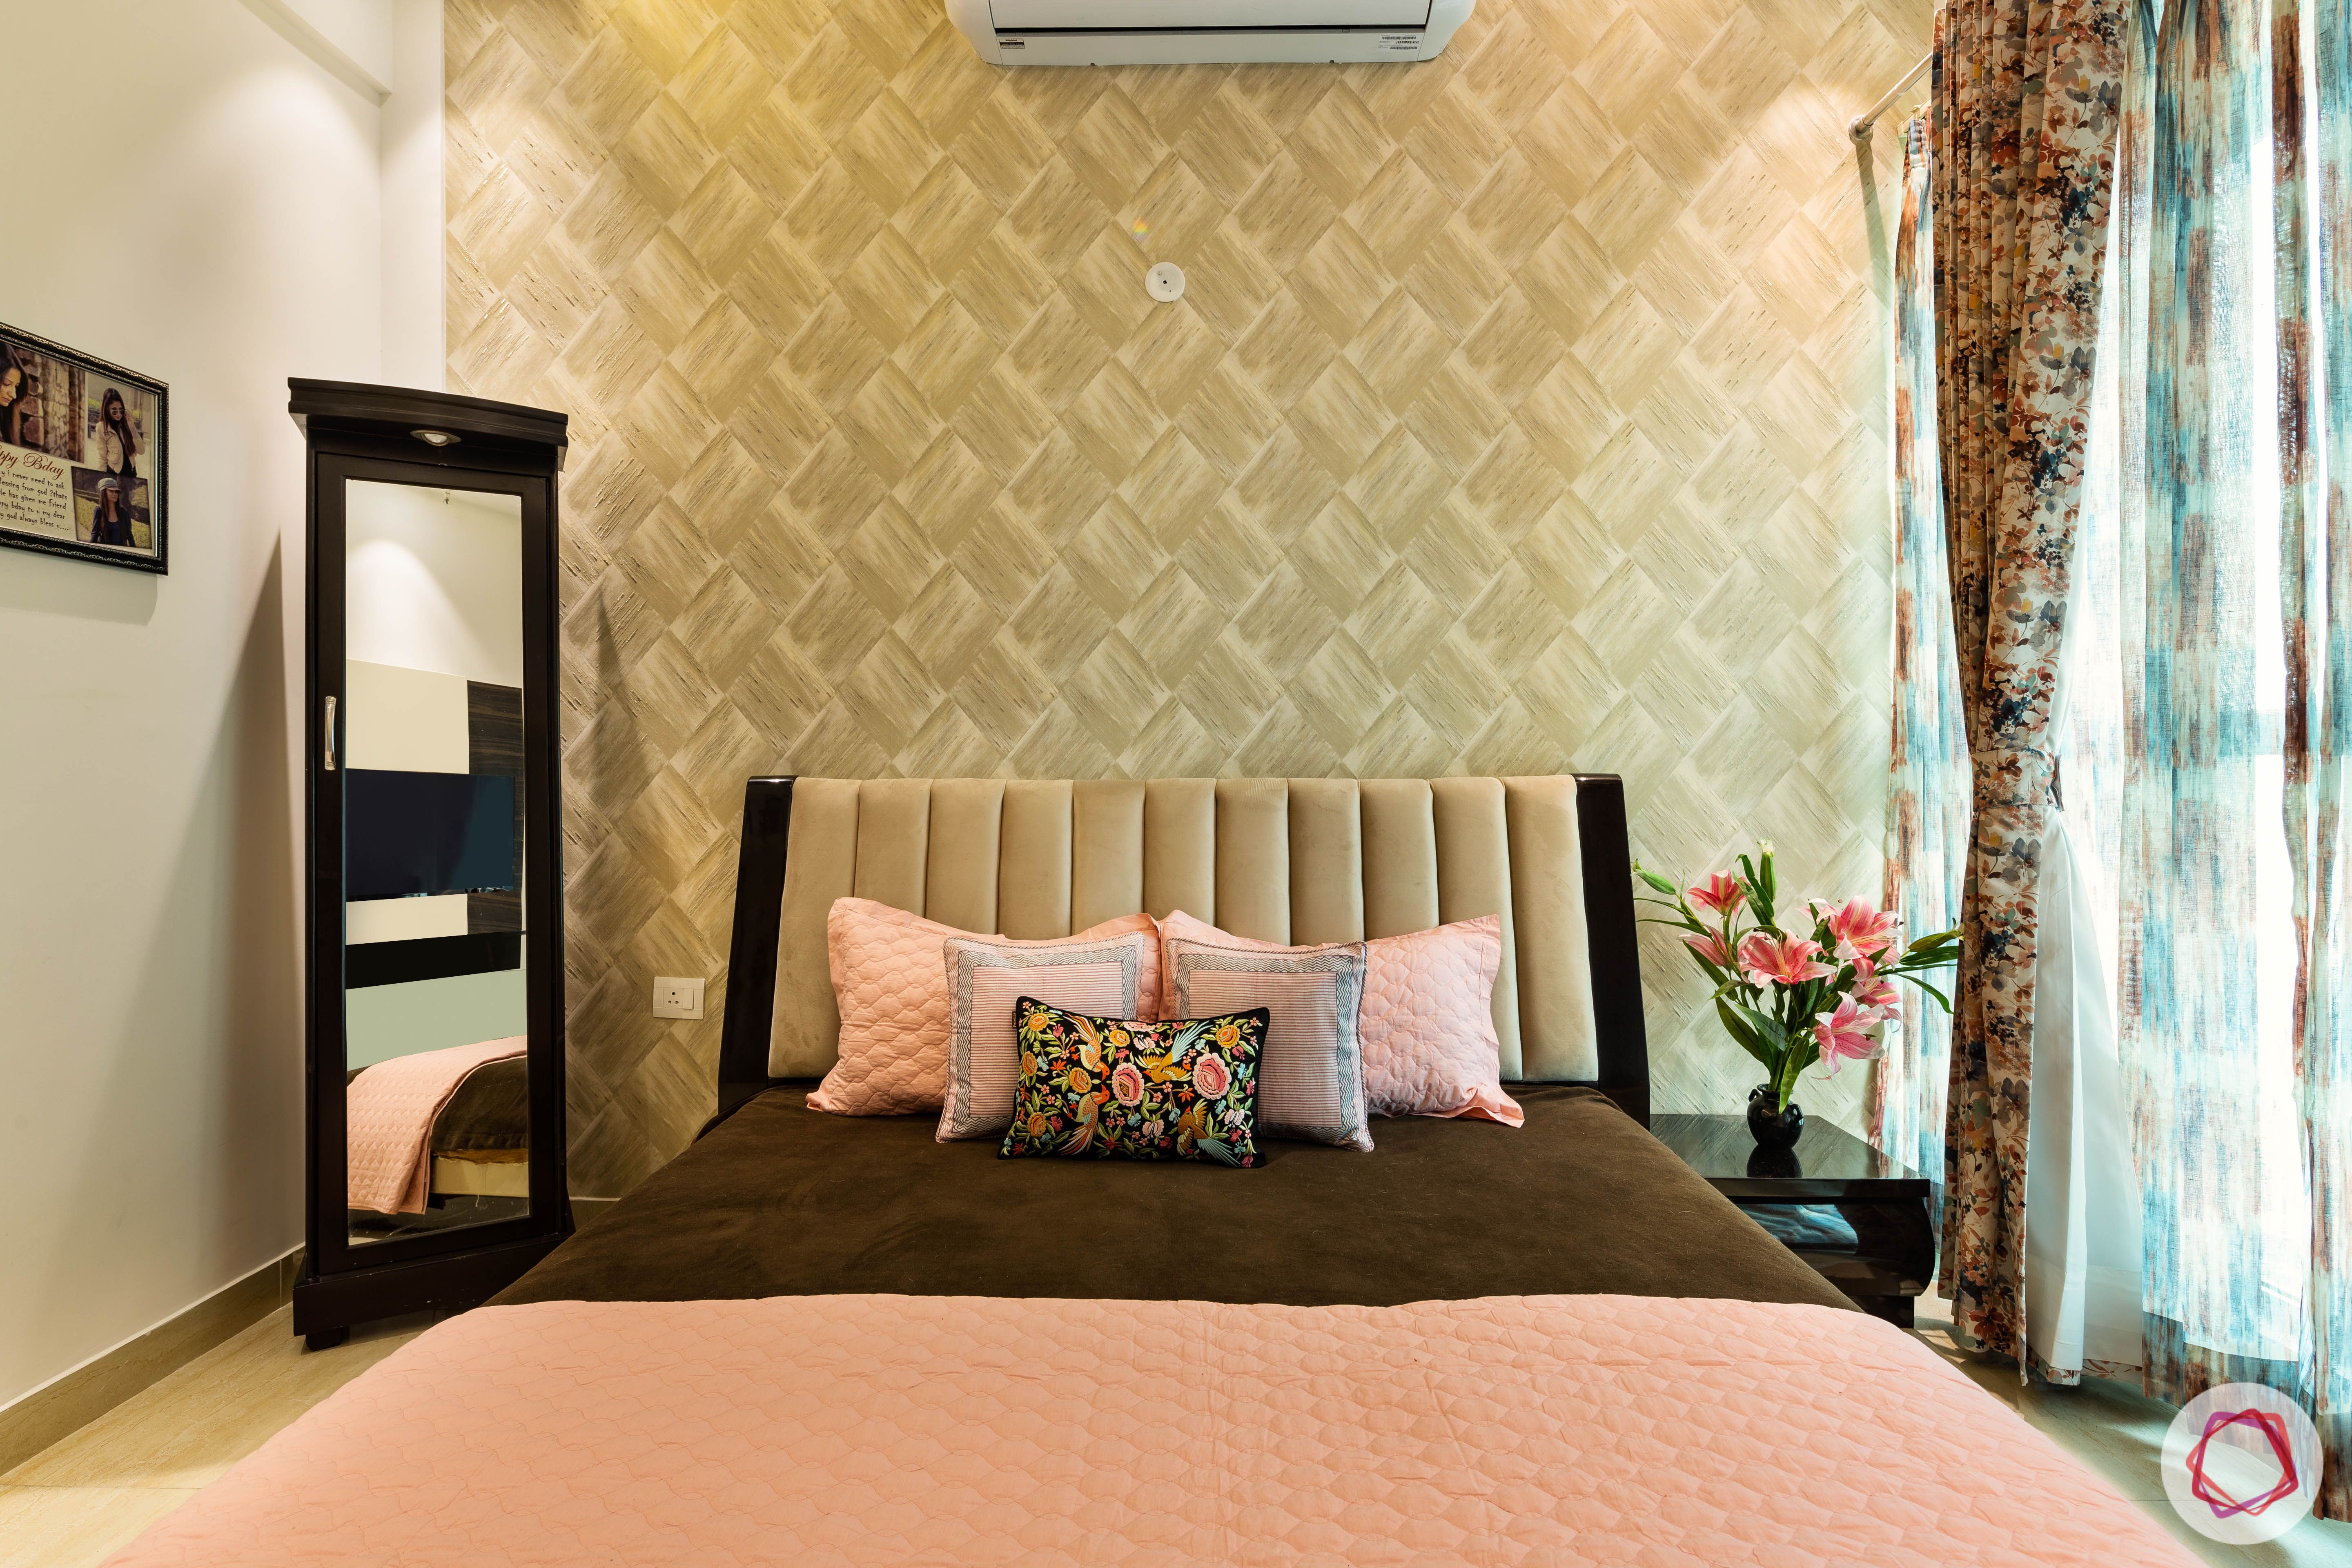 3 bhk flat-bedroom-brown wallpaper-dresser-headboard